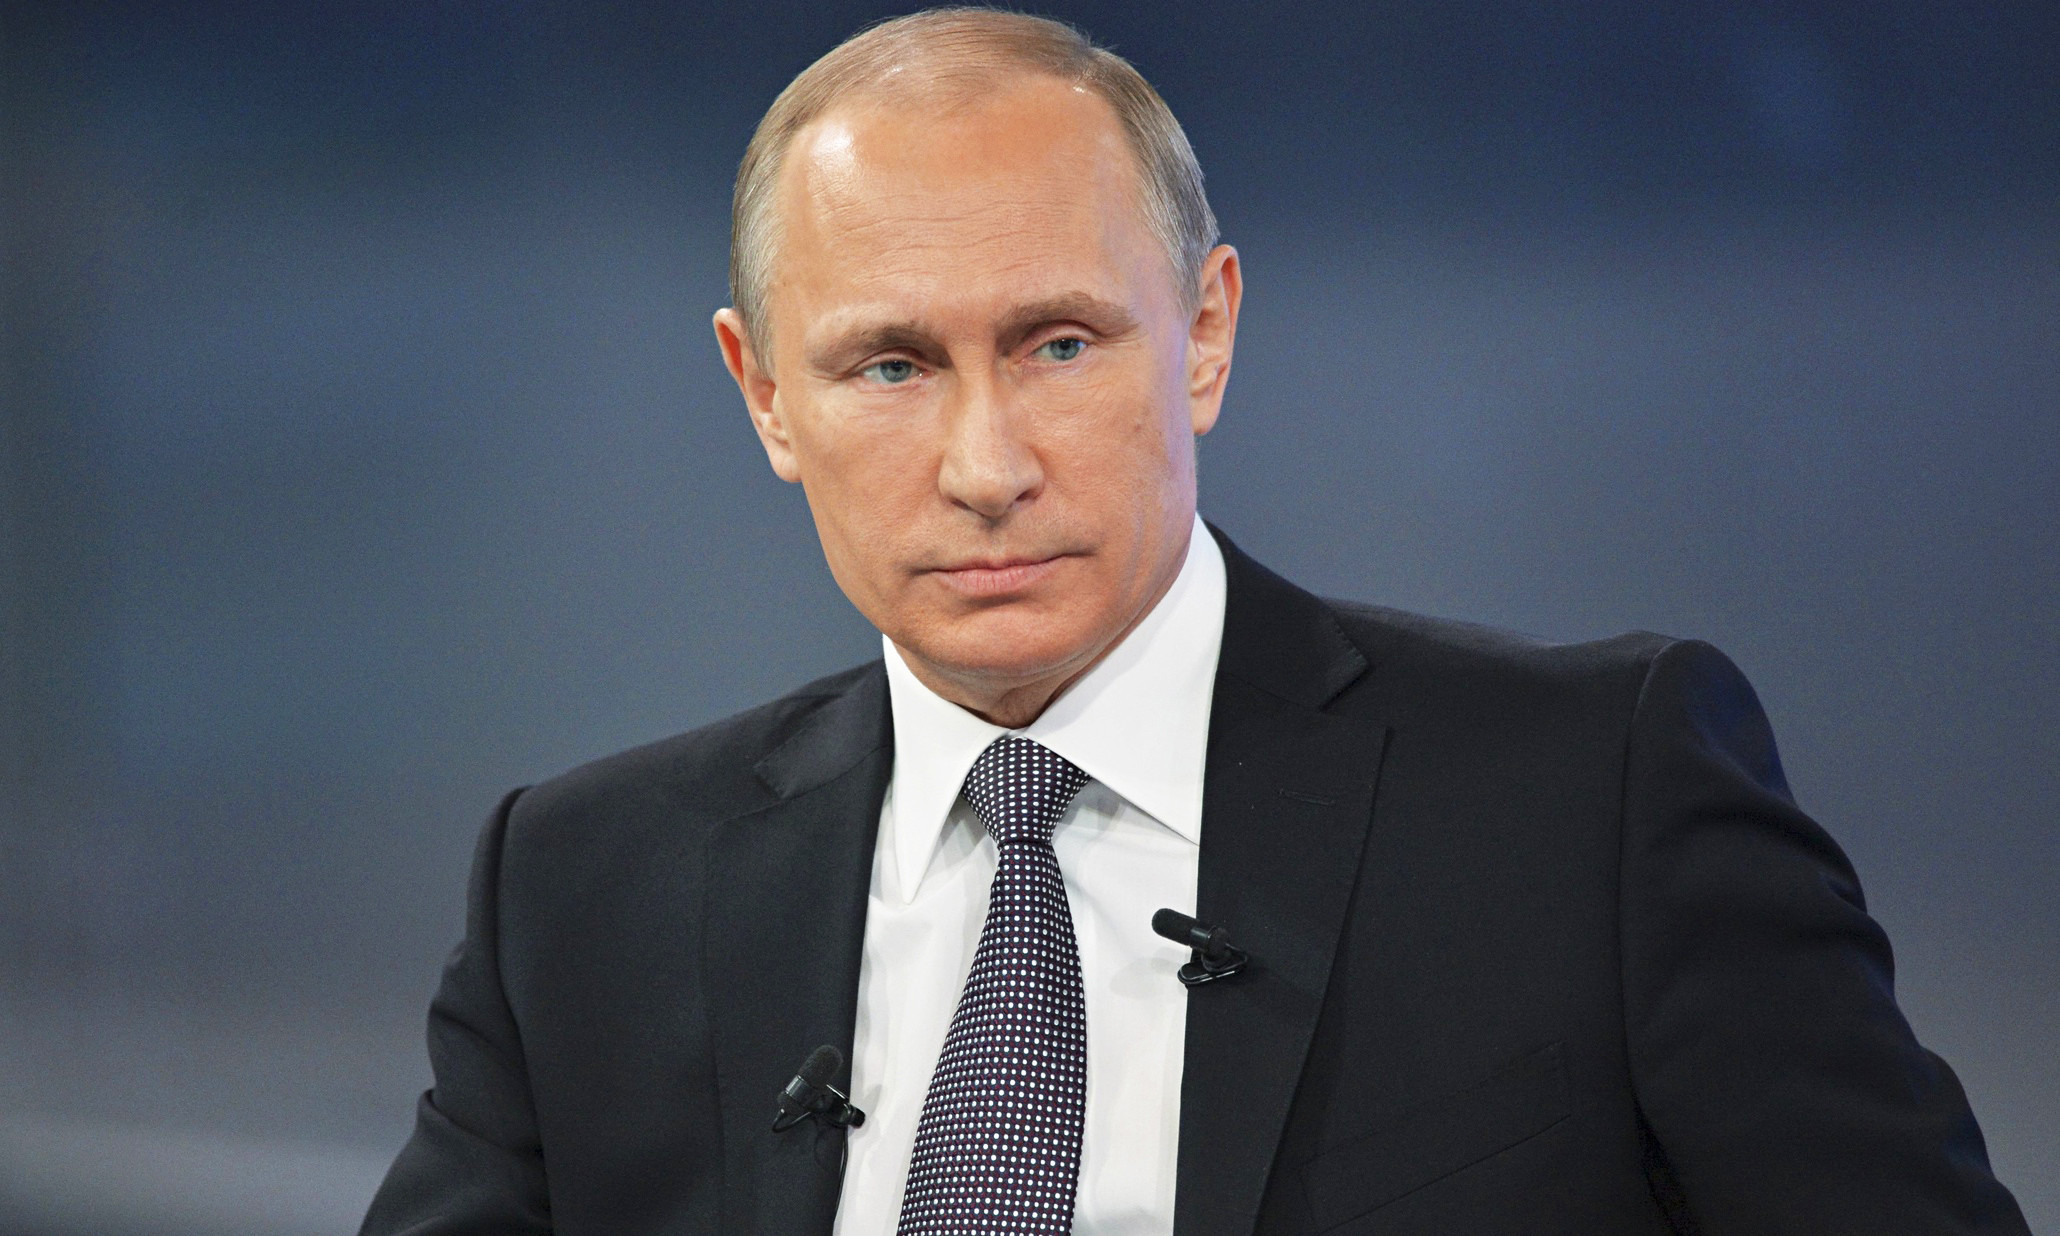 Vladimir-Putin-Wallpapers.jpg